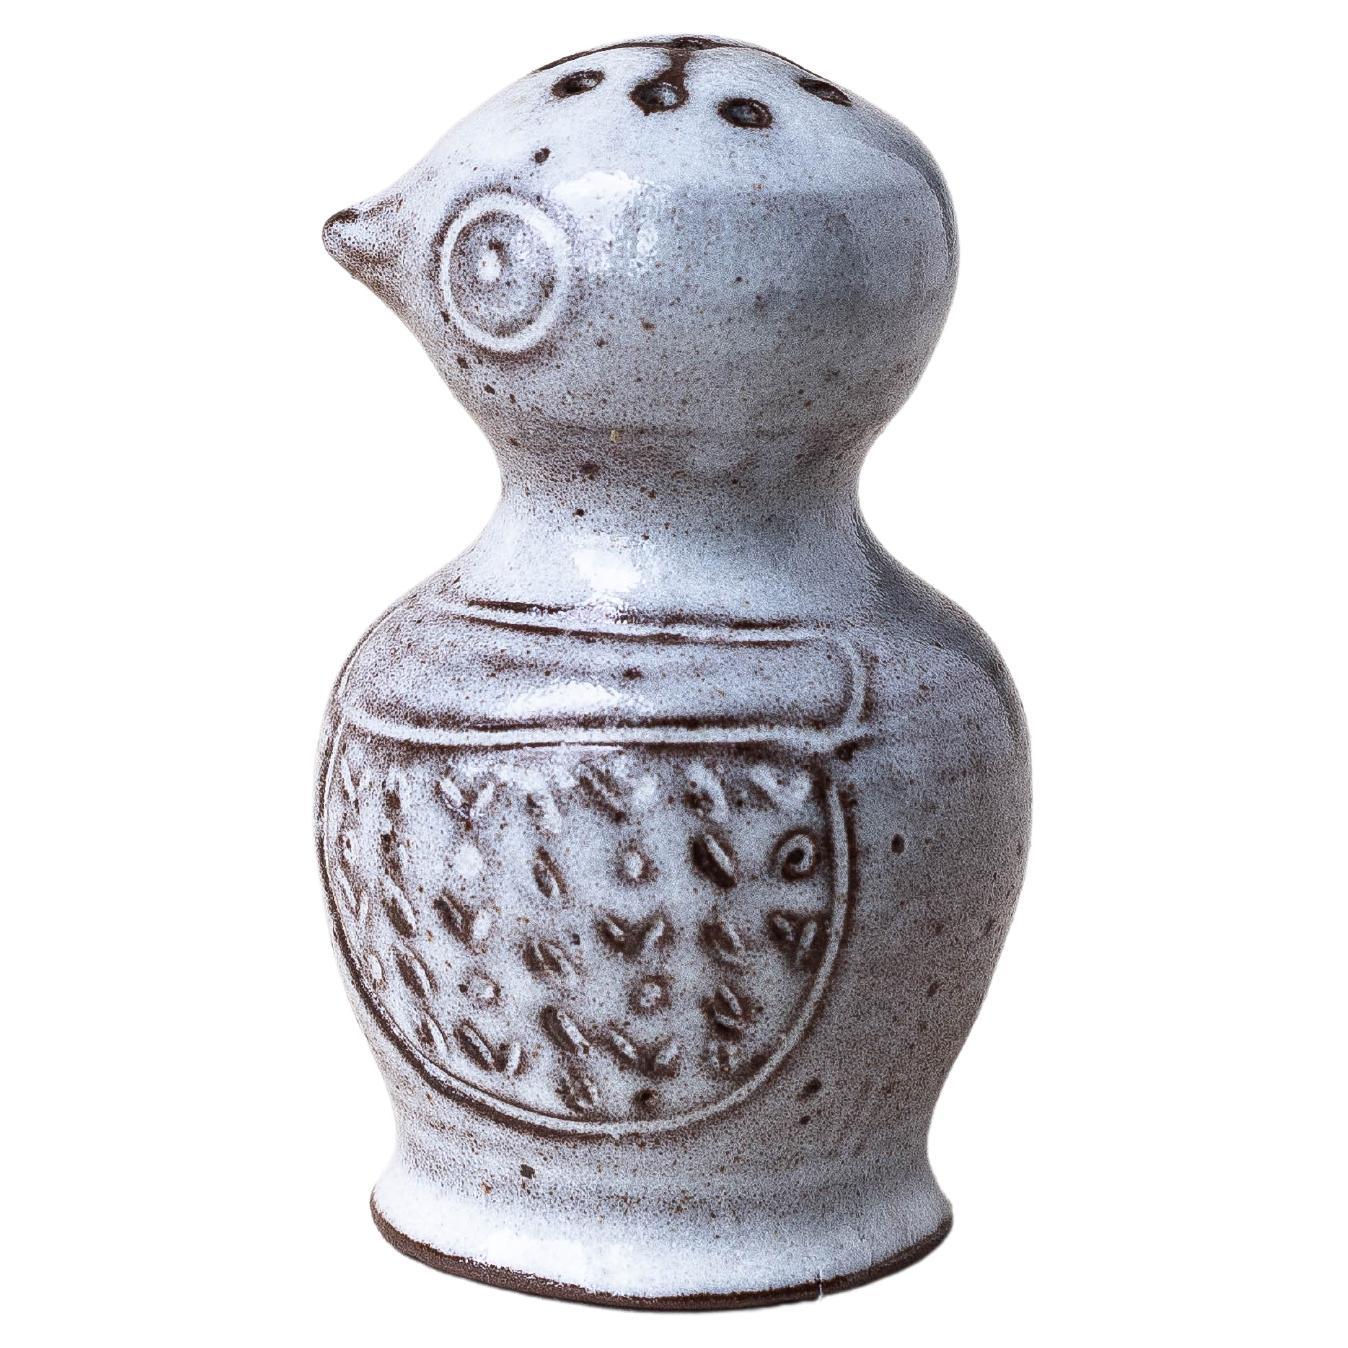 Bird Owl Salt Shaker in Ceramic by Jeanne and Norbert Pierlot Circa 1960